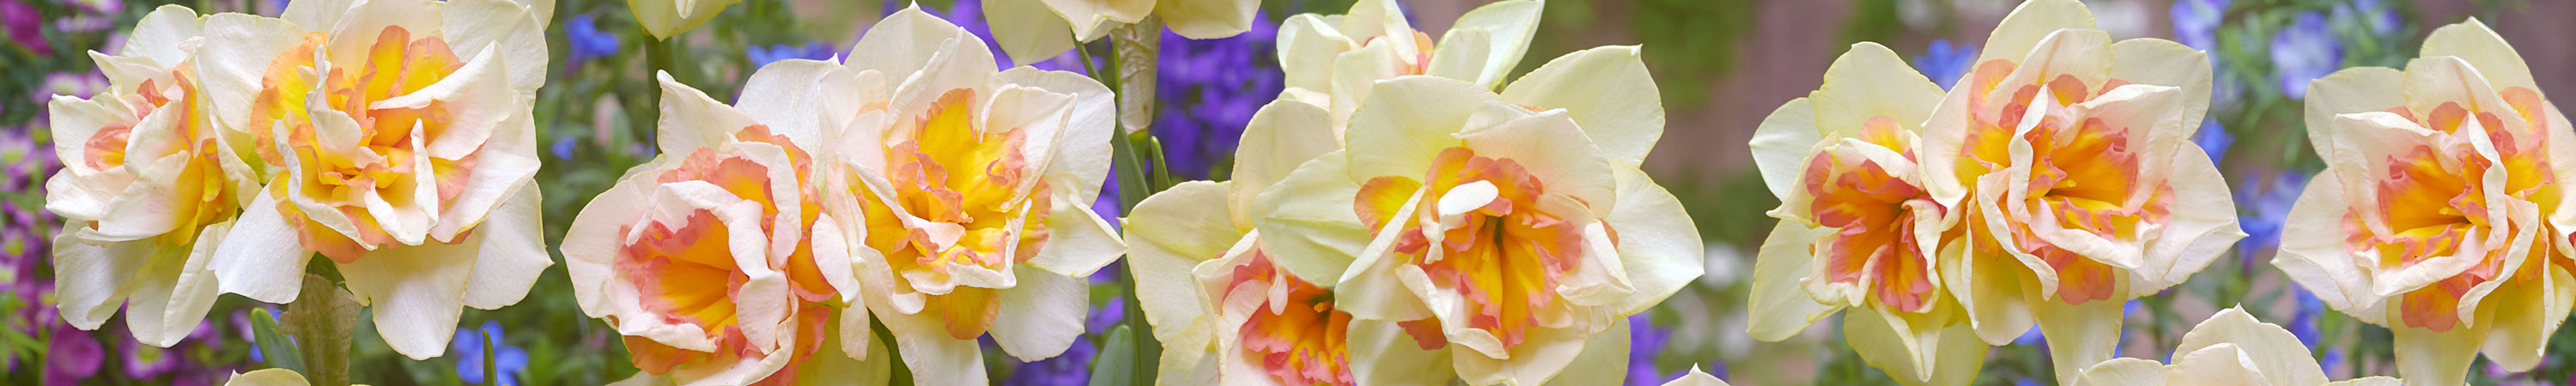 Daffodil - Narcissus